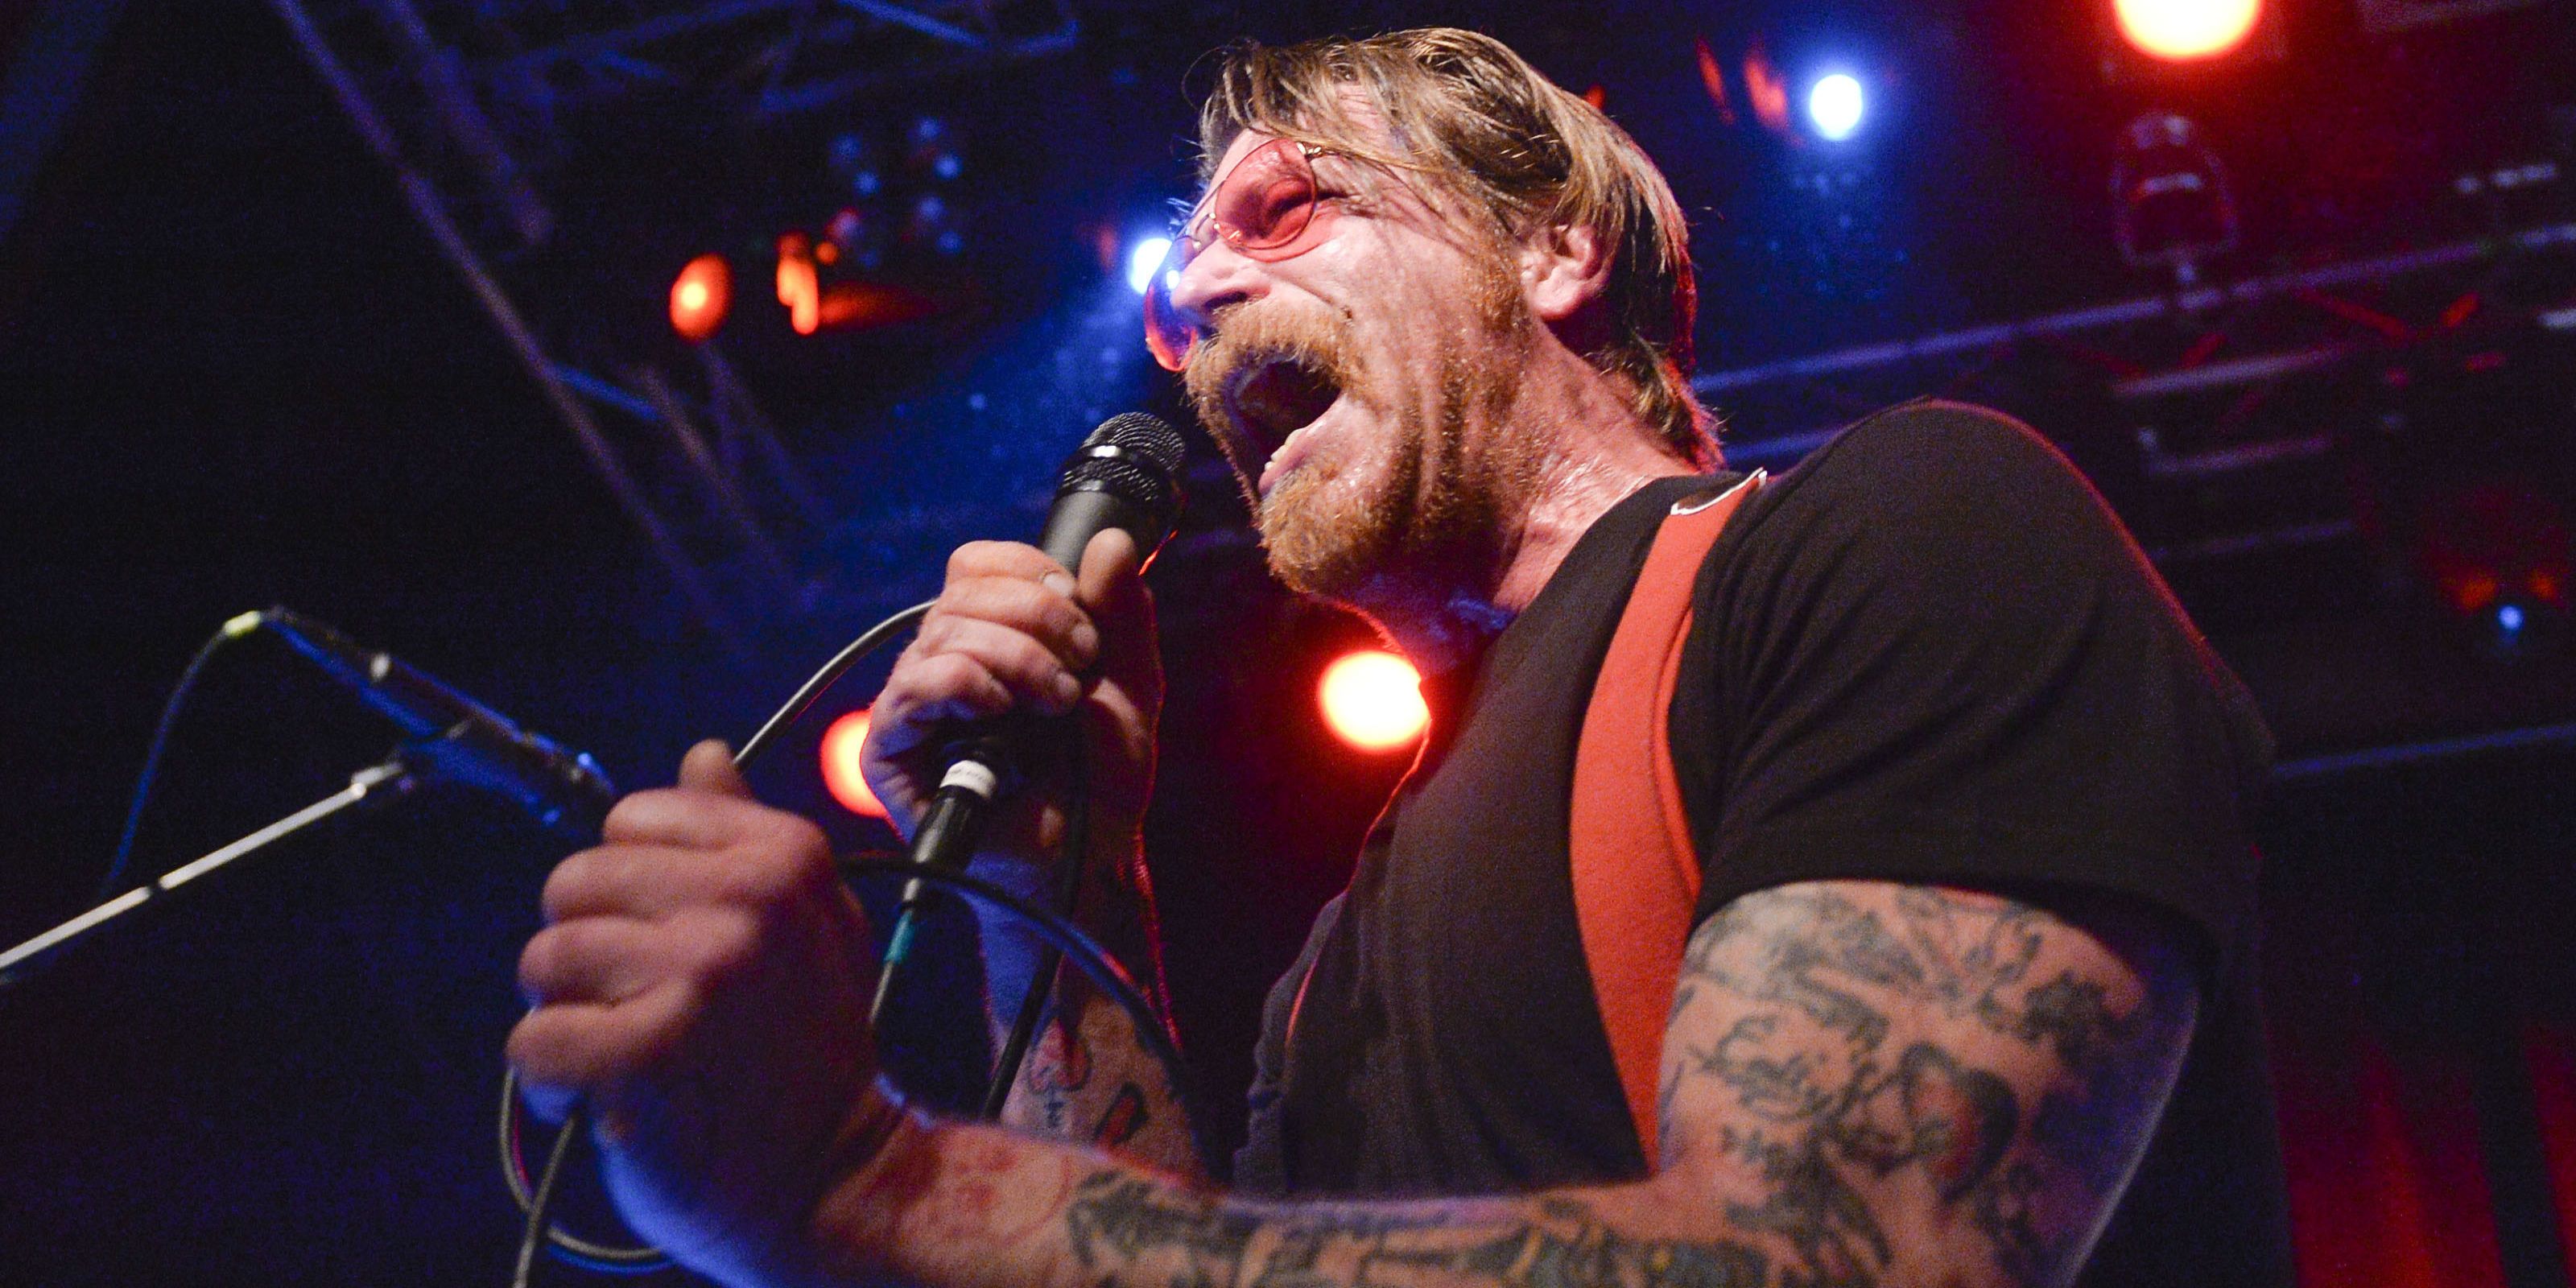 swedish deathmetal band that lead singer killed himself